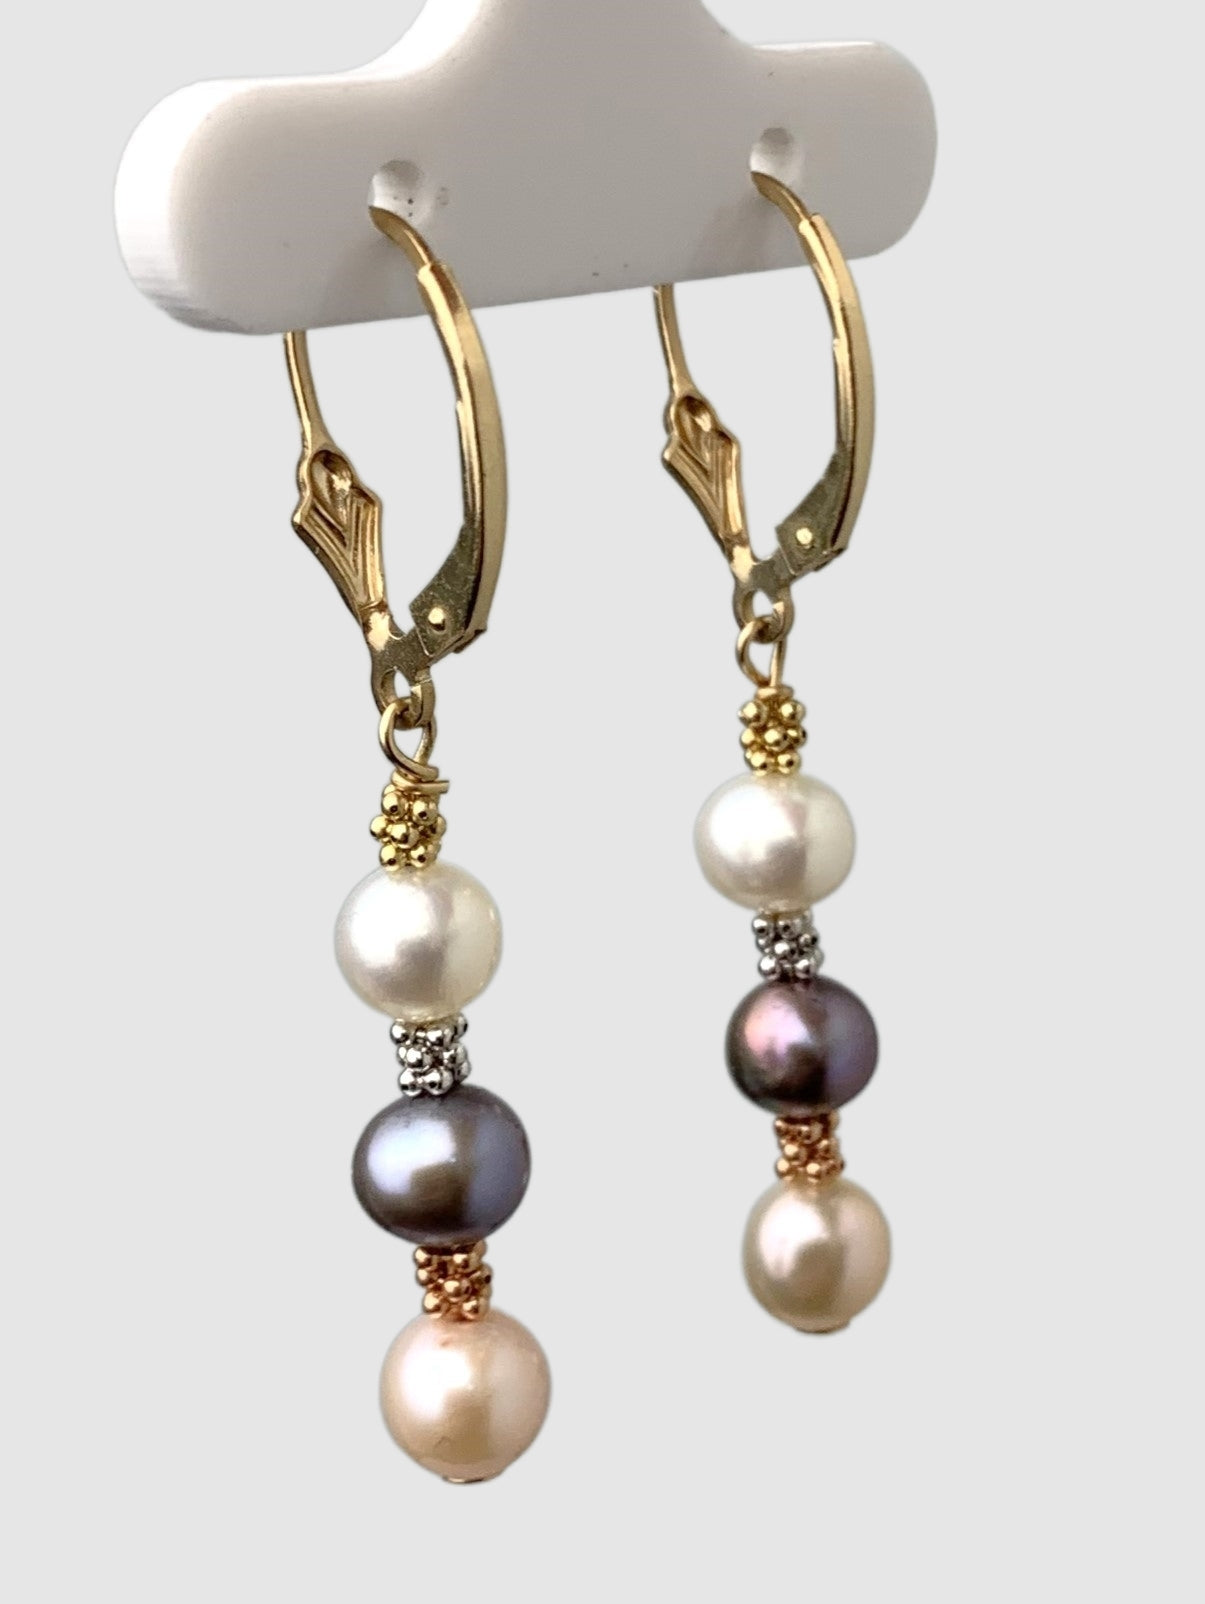 Pearl and Rondelle Drop Earrings in 14KY - EAR-015-WIREPRL14Y-M1